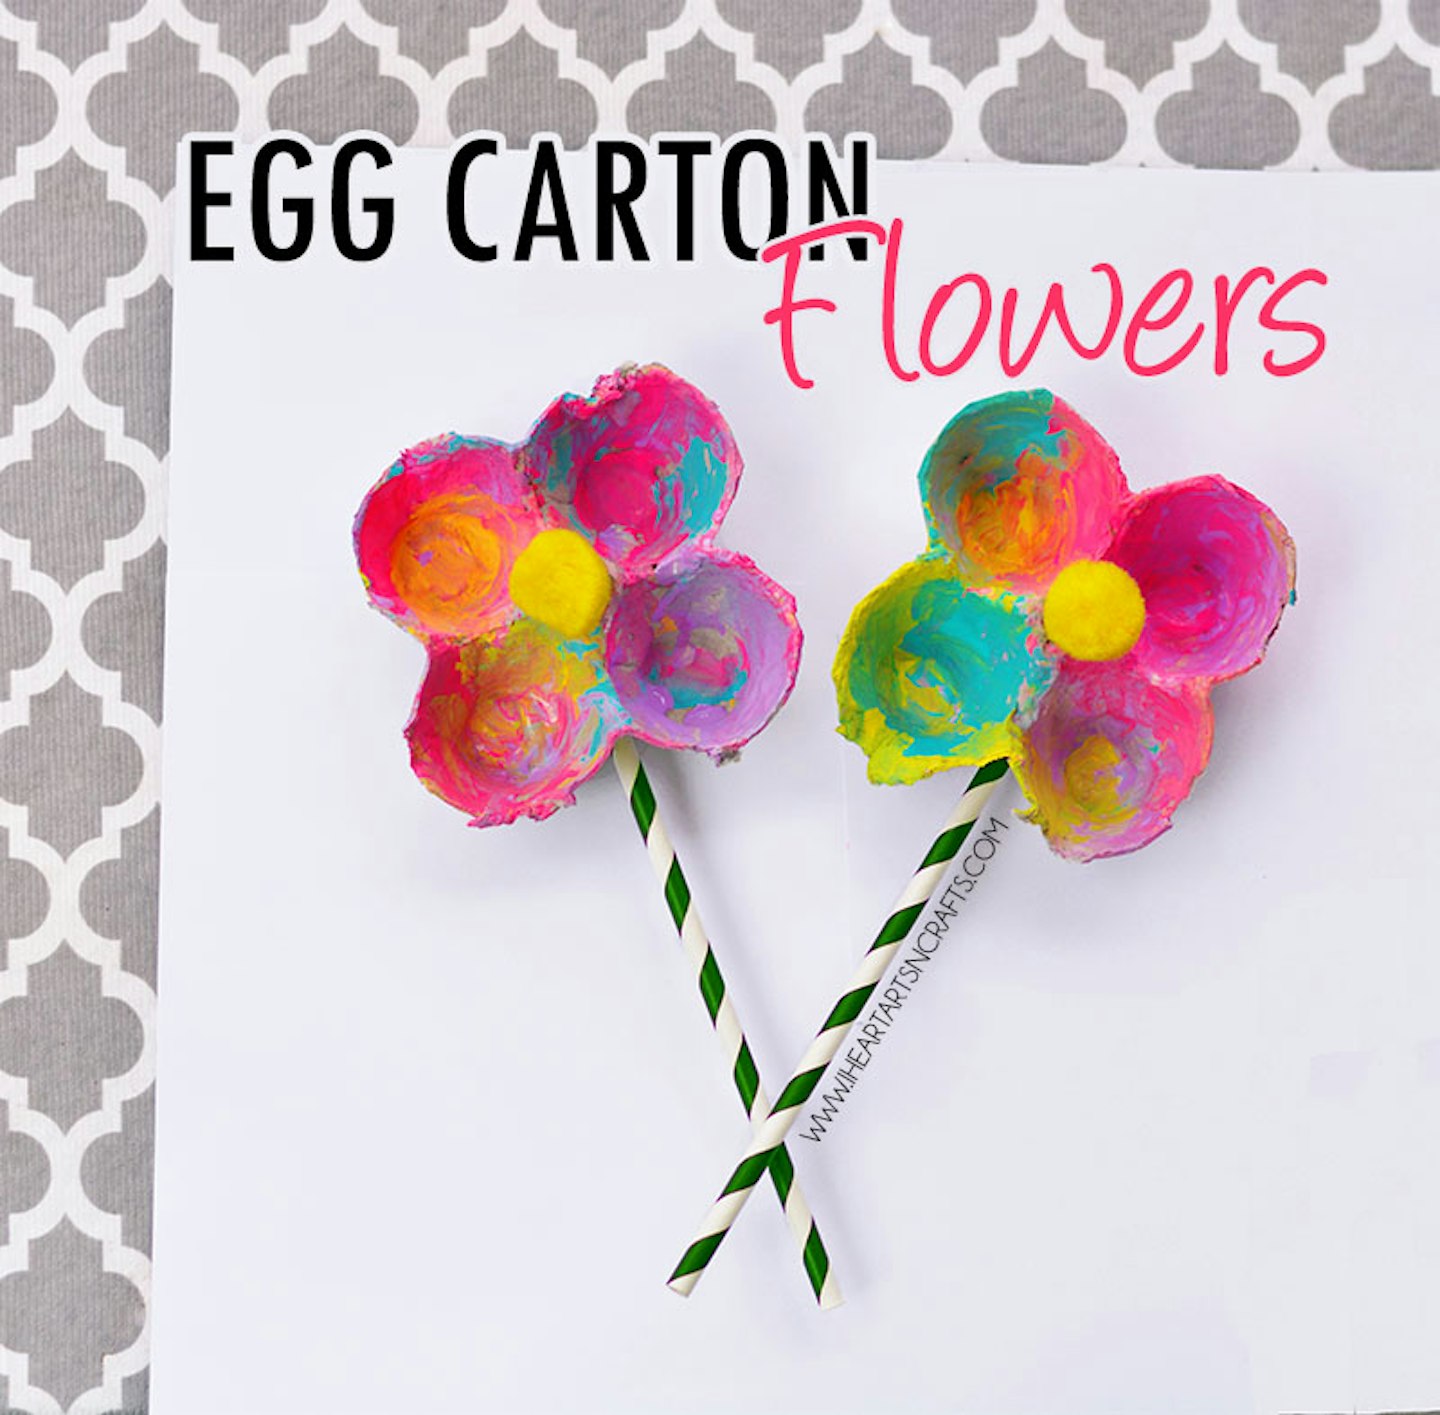 egg-carton-flowers